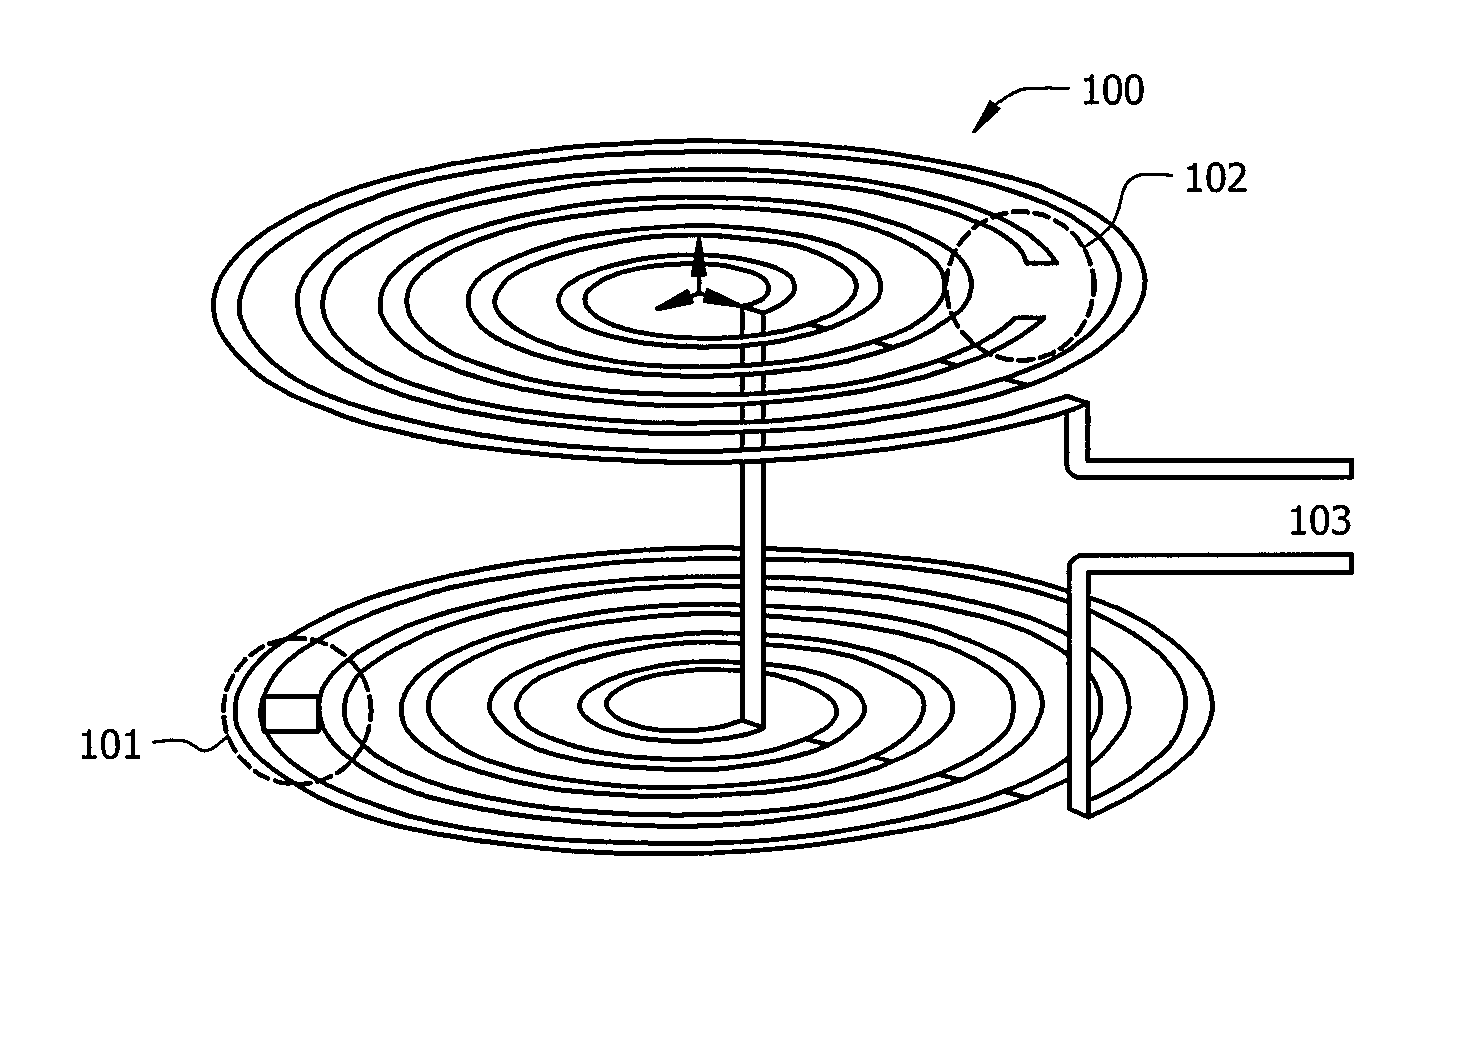 Miniature and multi-band RF coil design